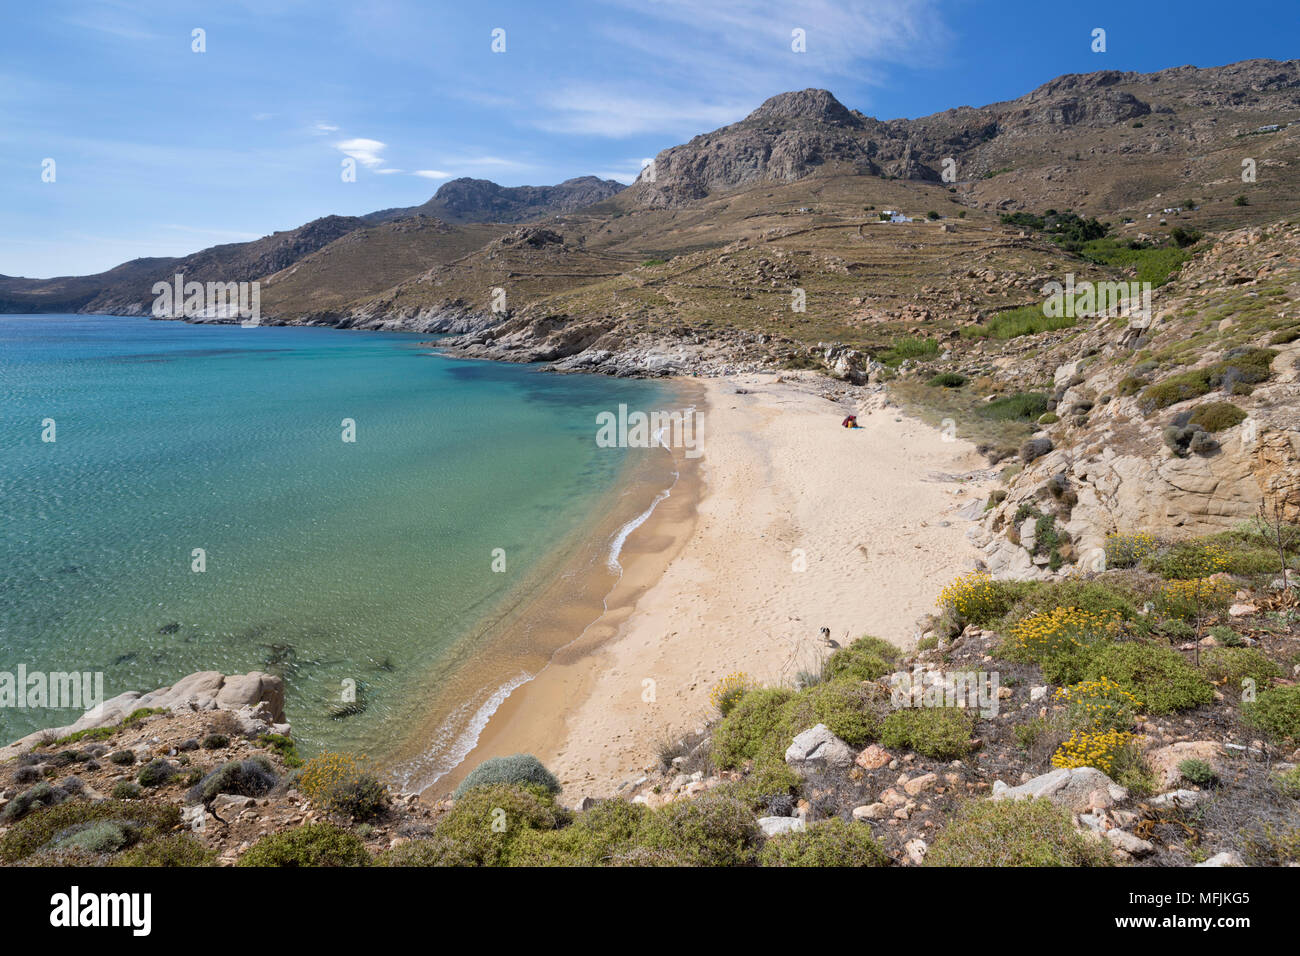 View over Kalo Ampeli beach near Livadi on island's south coast, Serifos, Cyclades, Aegean Sea, Greek Islands, Greece, Europe Stock Photo